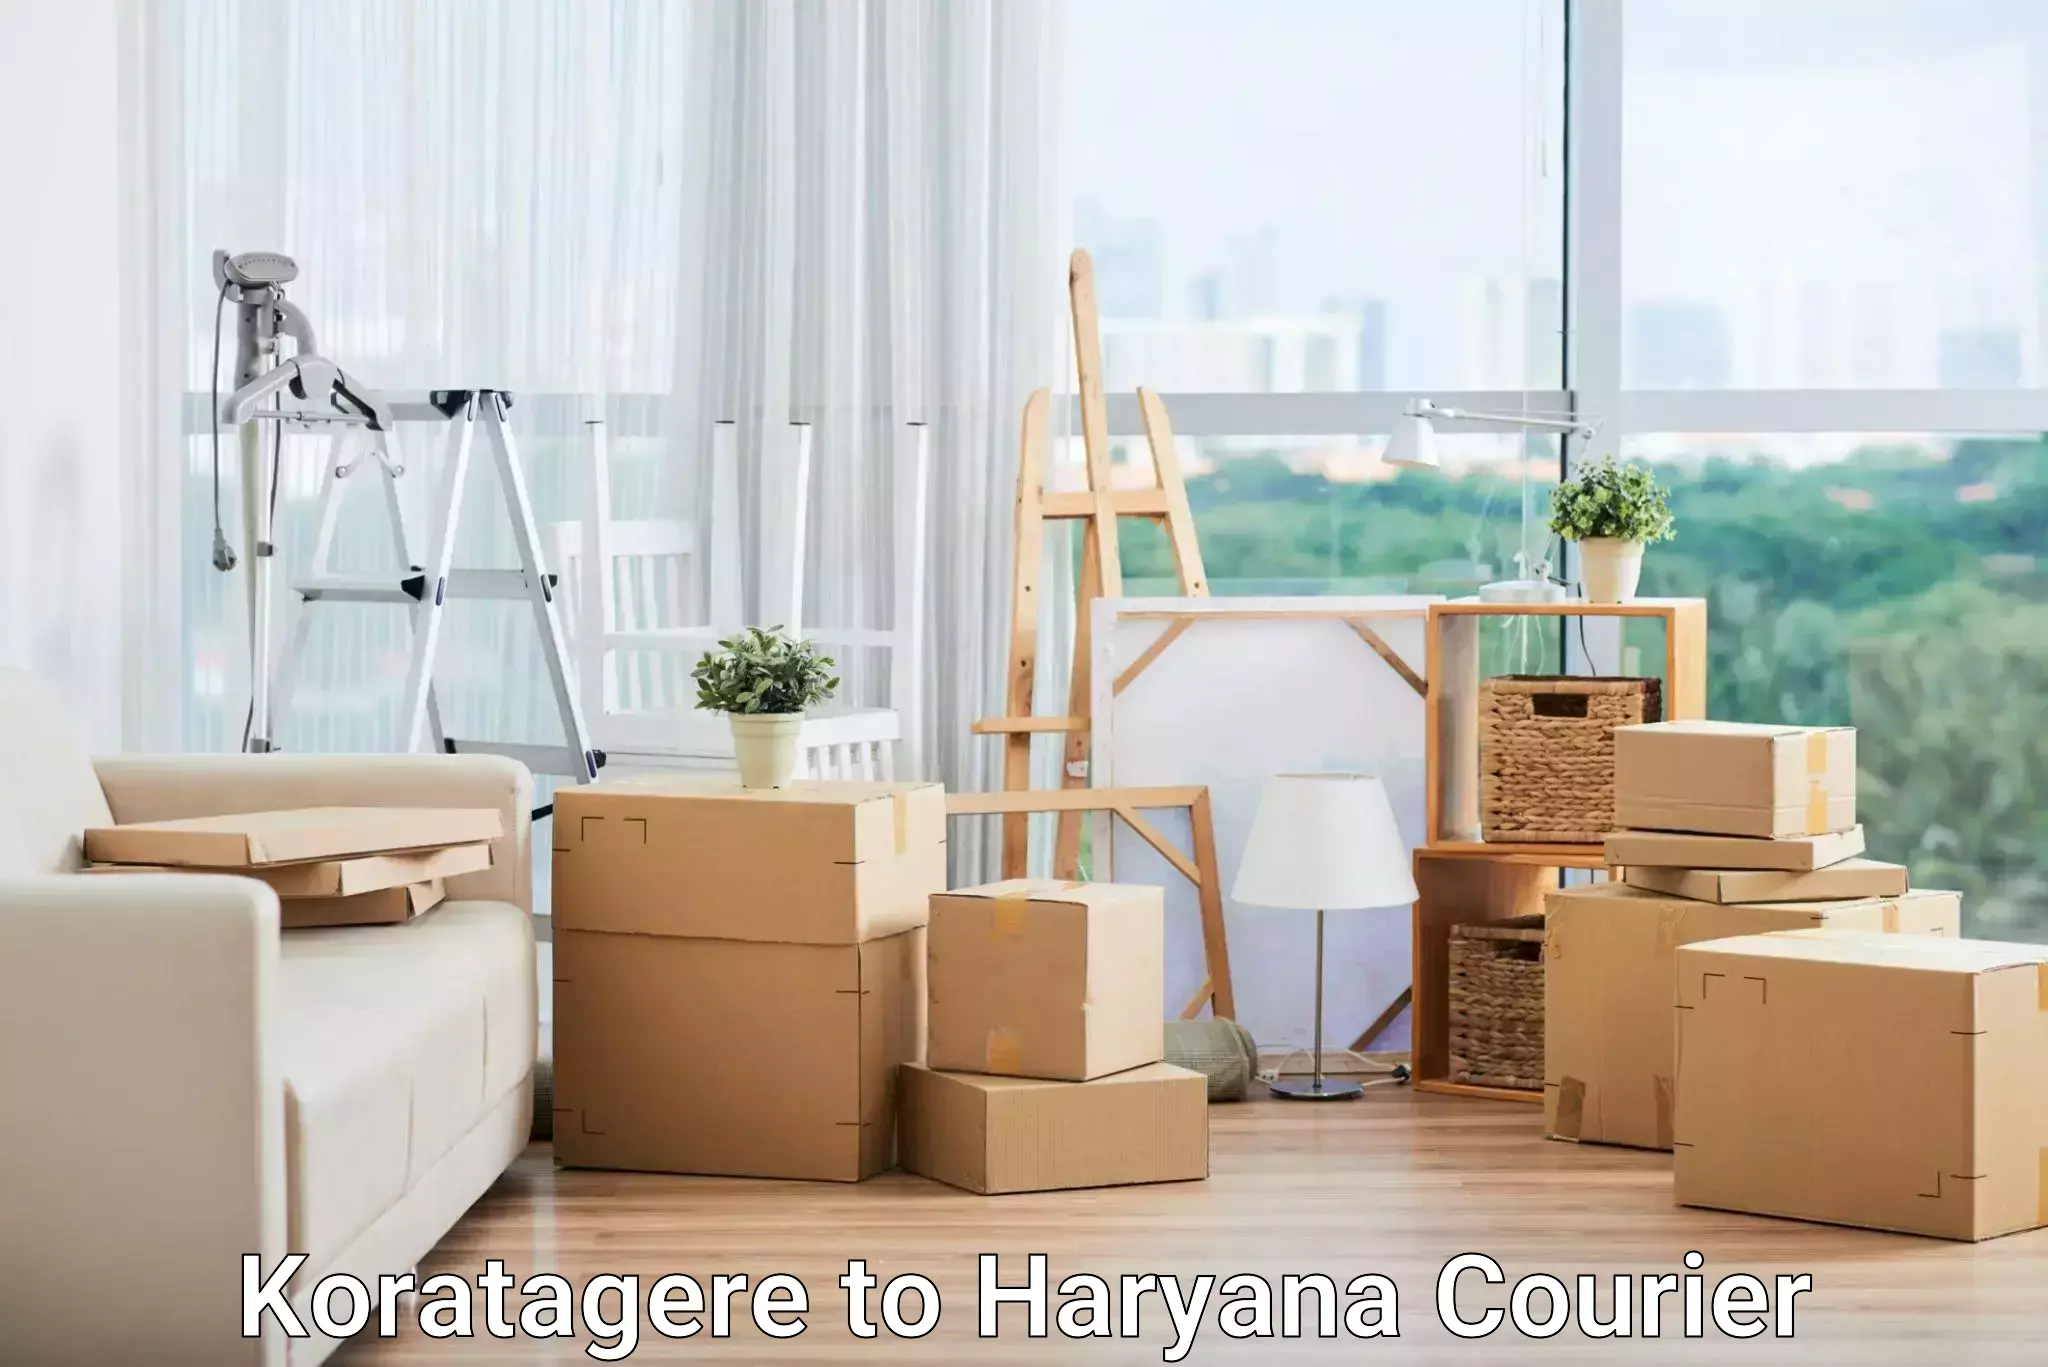 Advanced shipping network Koratagere to NCR Haryana